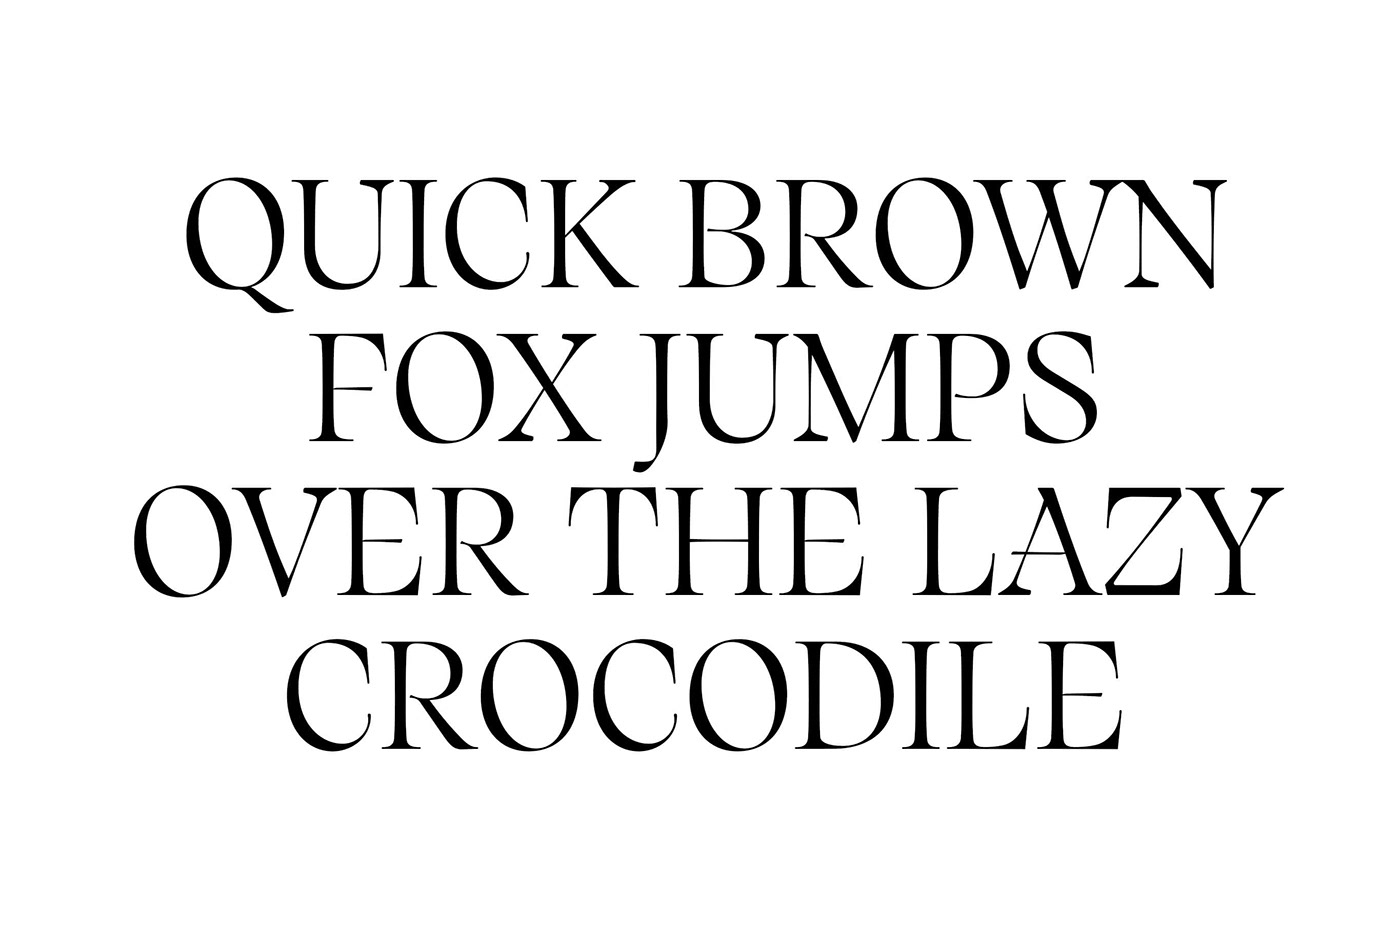 Display font fonts Headline italic serif Typeface webfont elegant type design